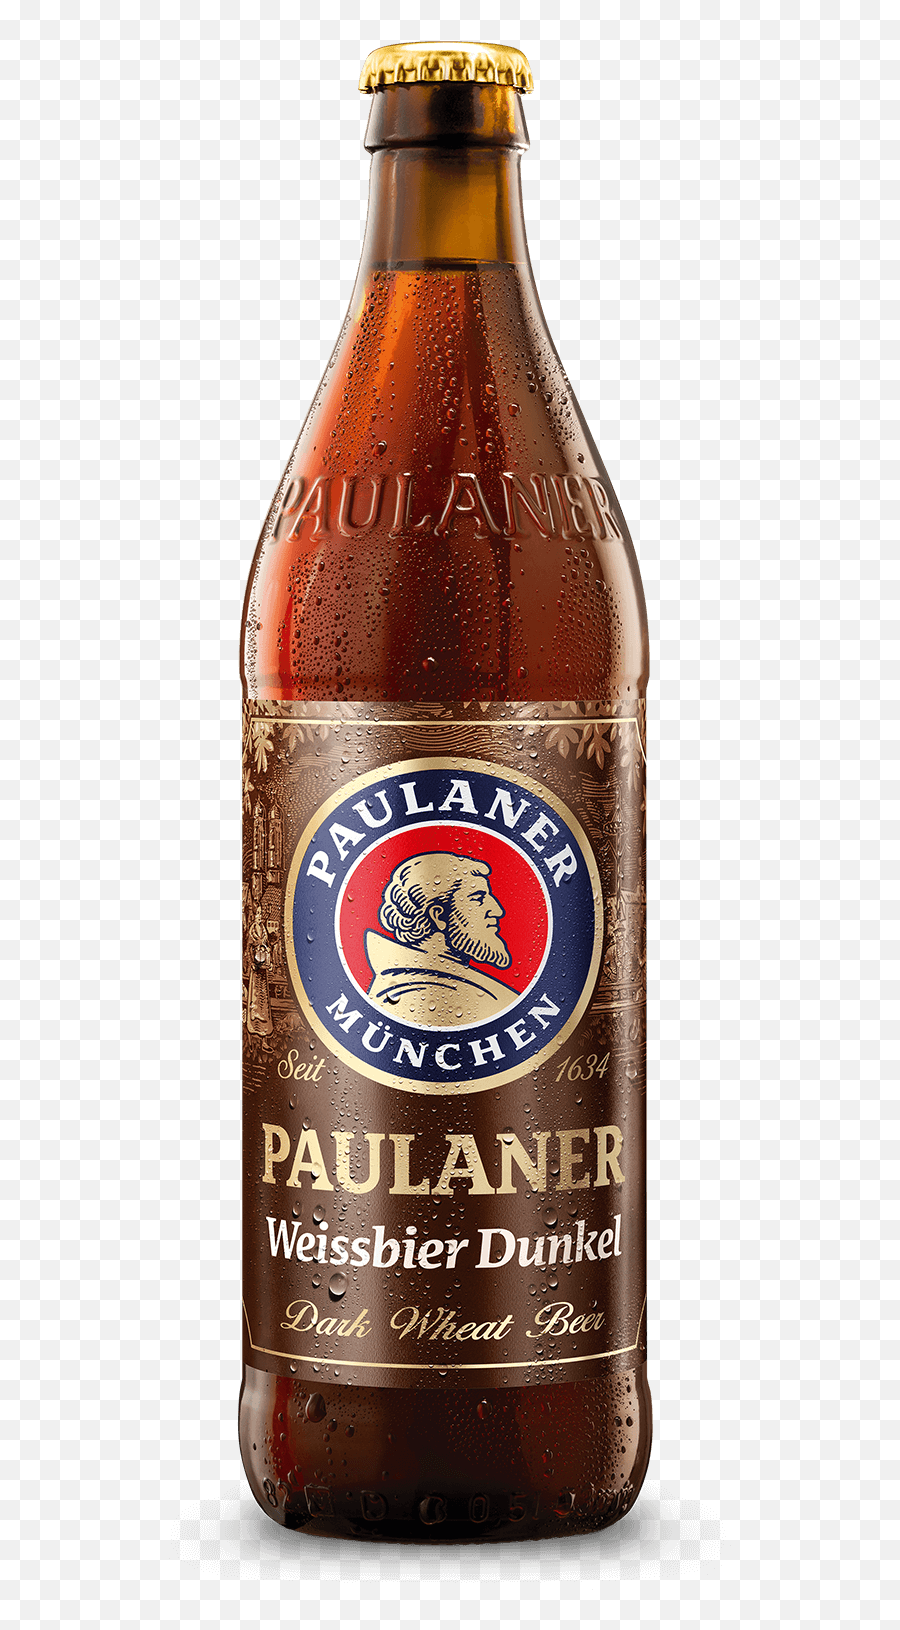 Fc Bayern München - Paulaner Dunkel Emoji,Types Of Emotions In Beer Commercials